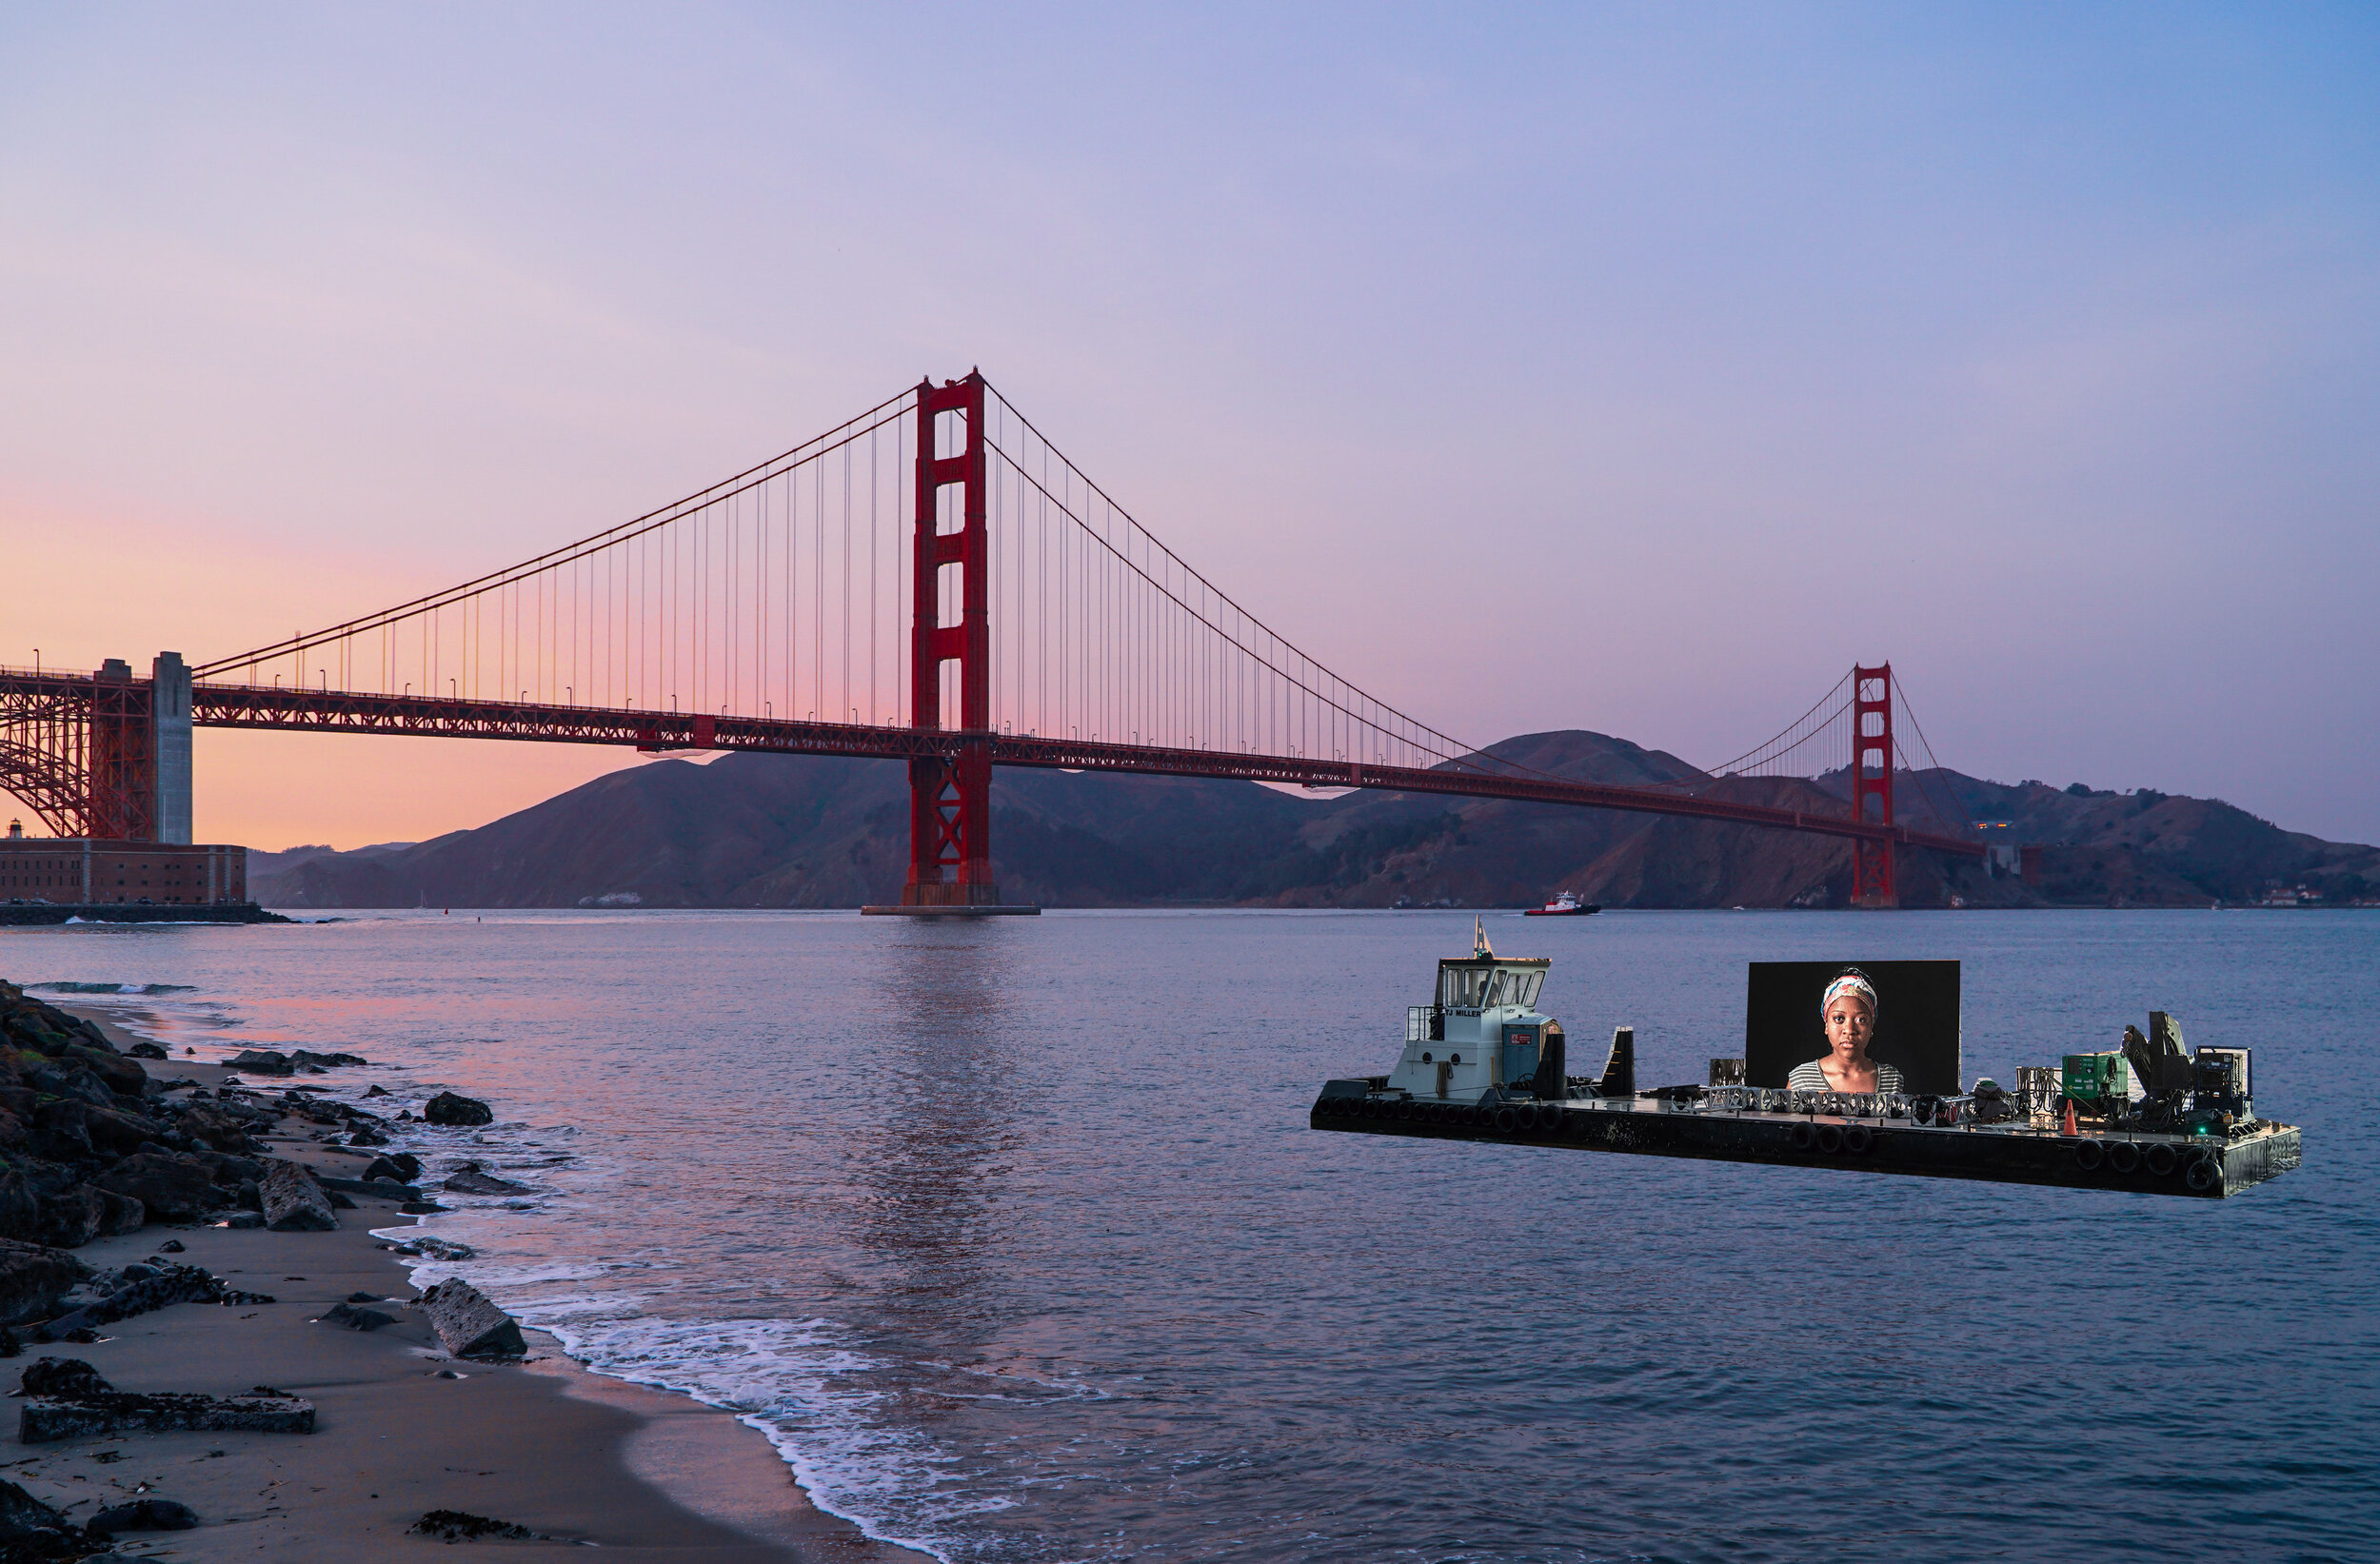 Shimon Attie, Night Watch (San Francisco, Golden Gate Bridge), Digital Rendering, 2021. 